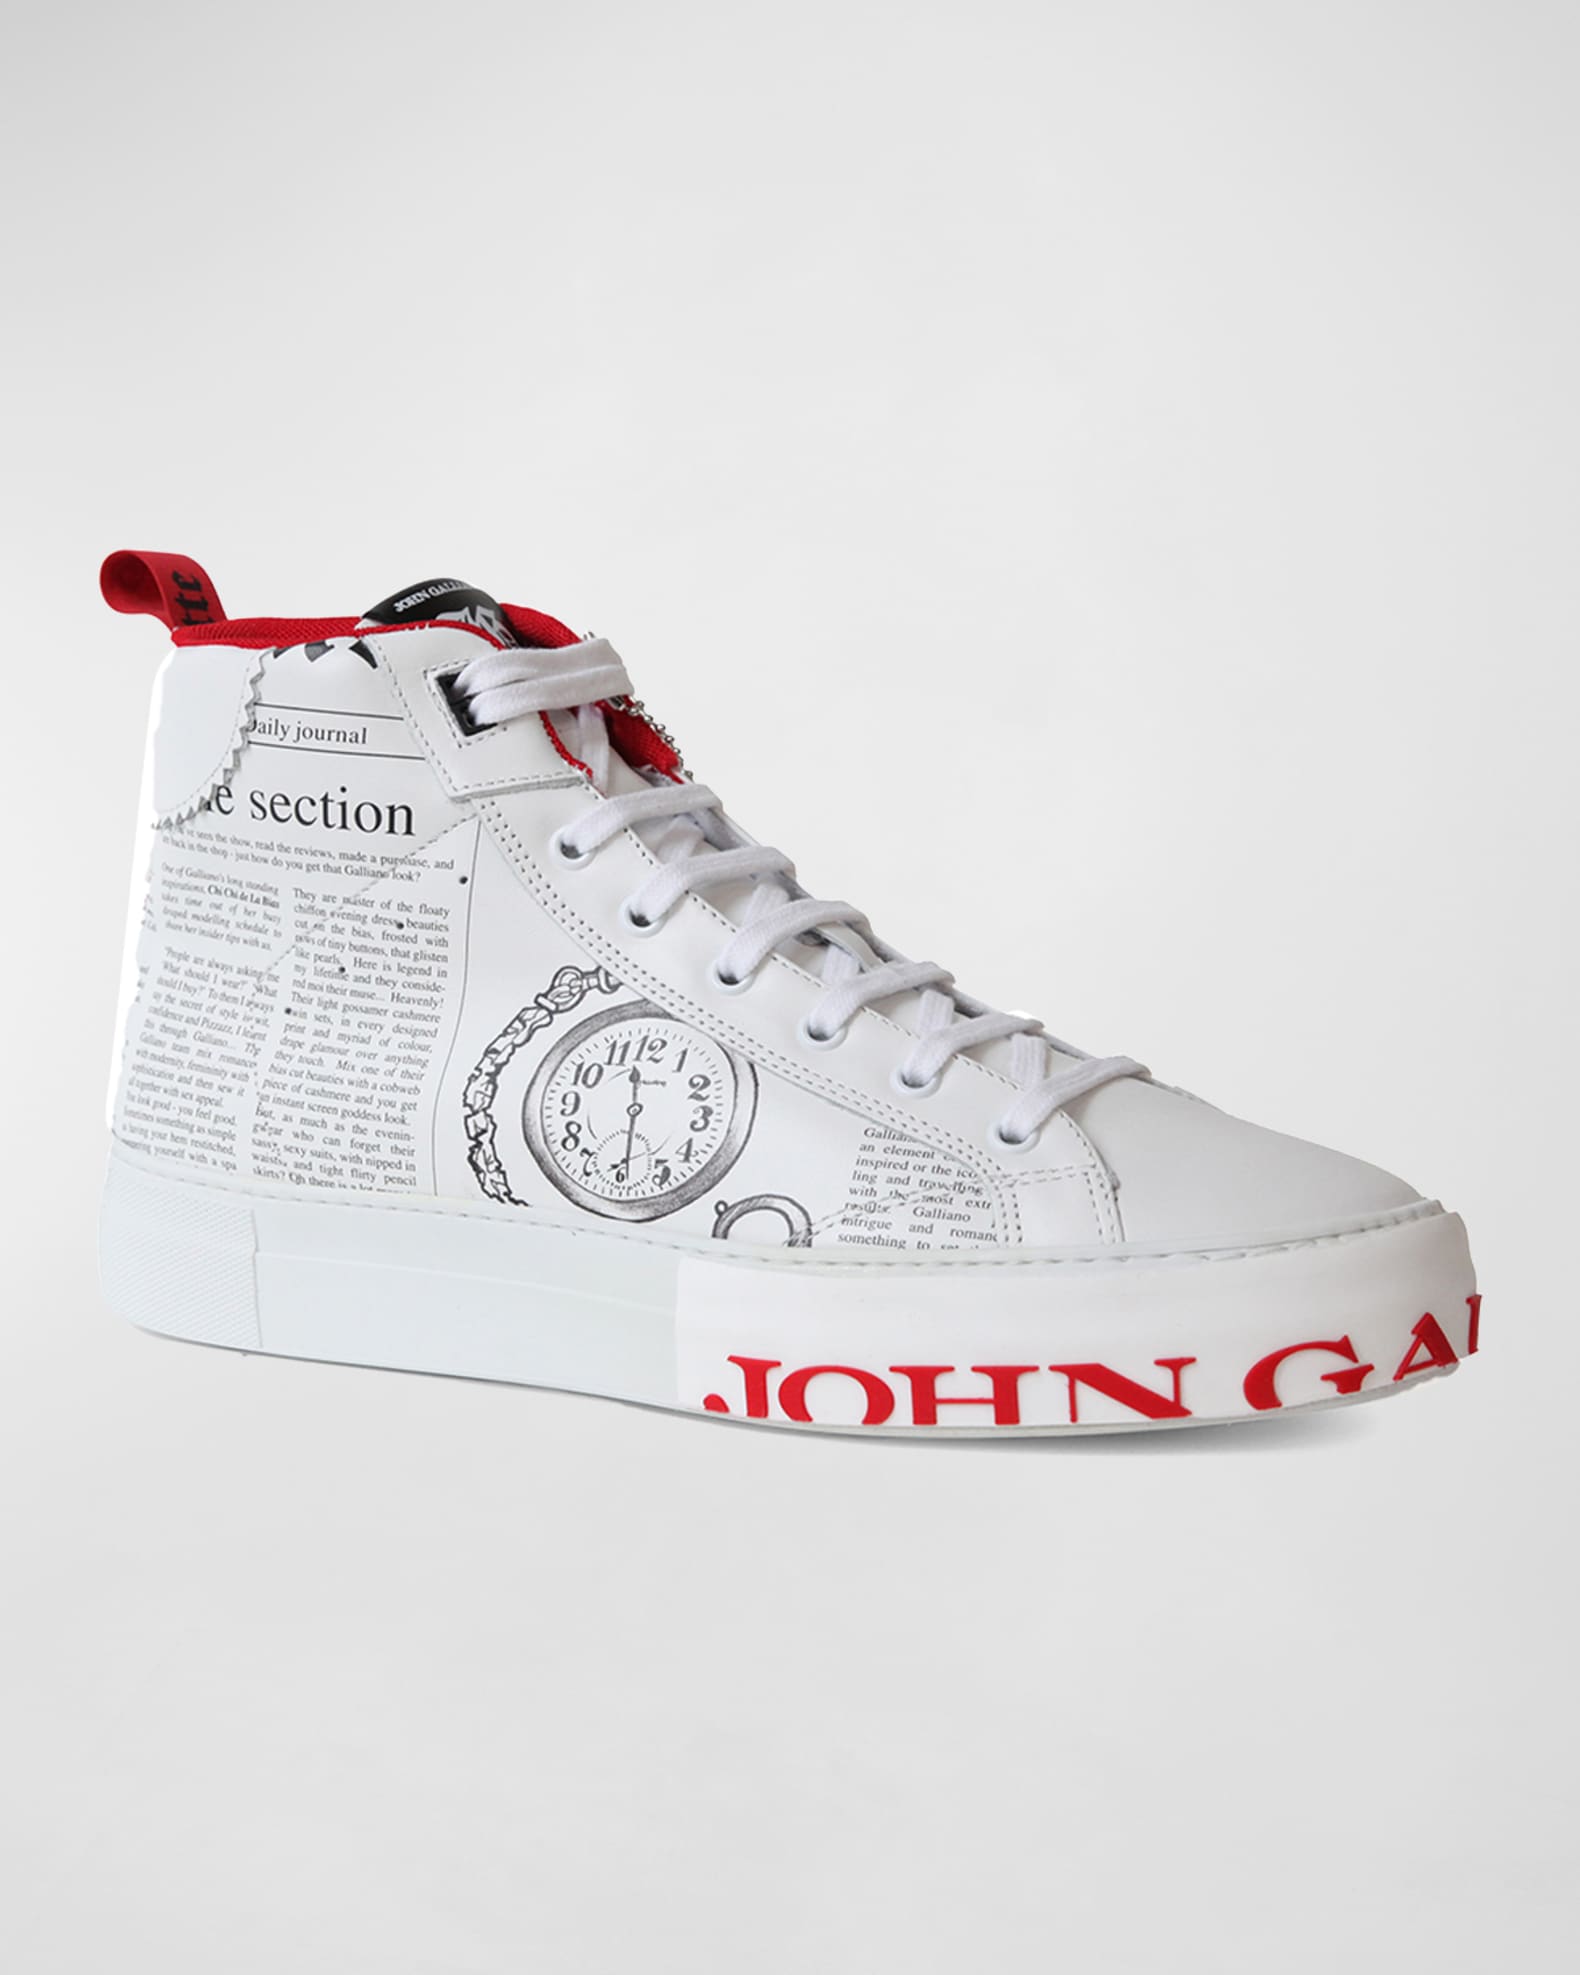 John Galliano #sneakers #newspaper #limitedsneakers #johngalliano